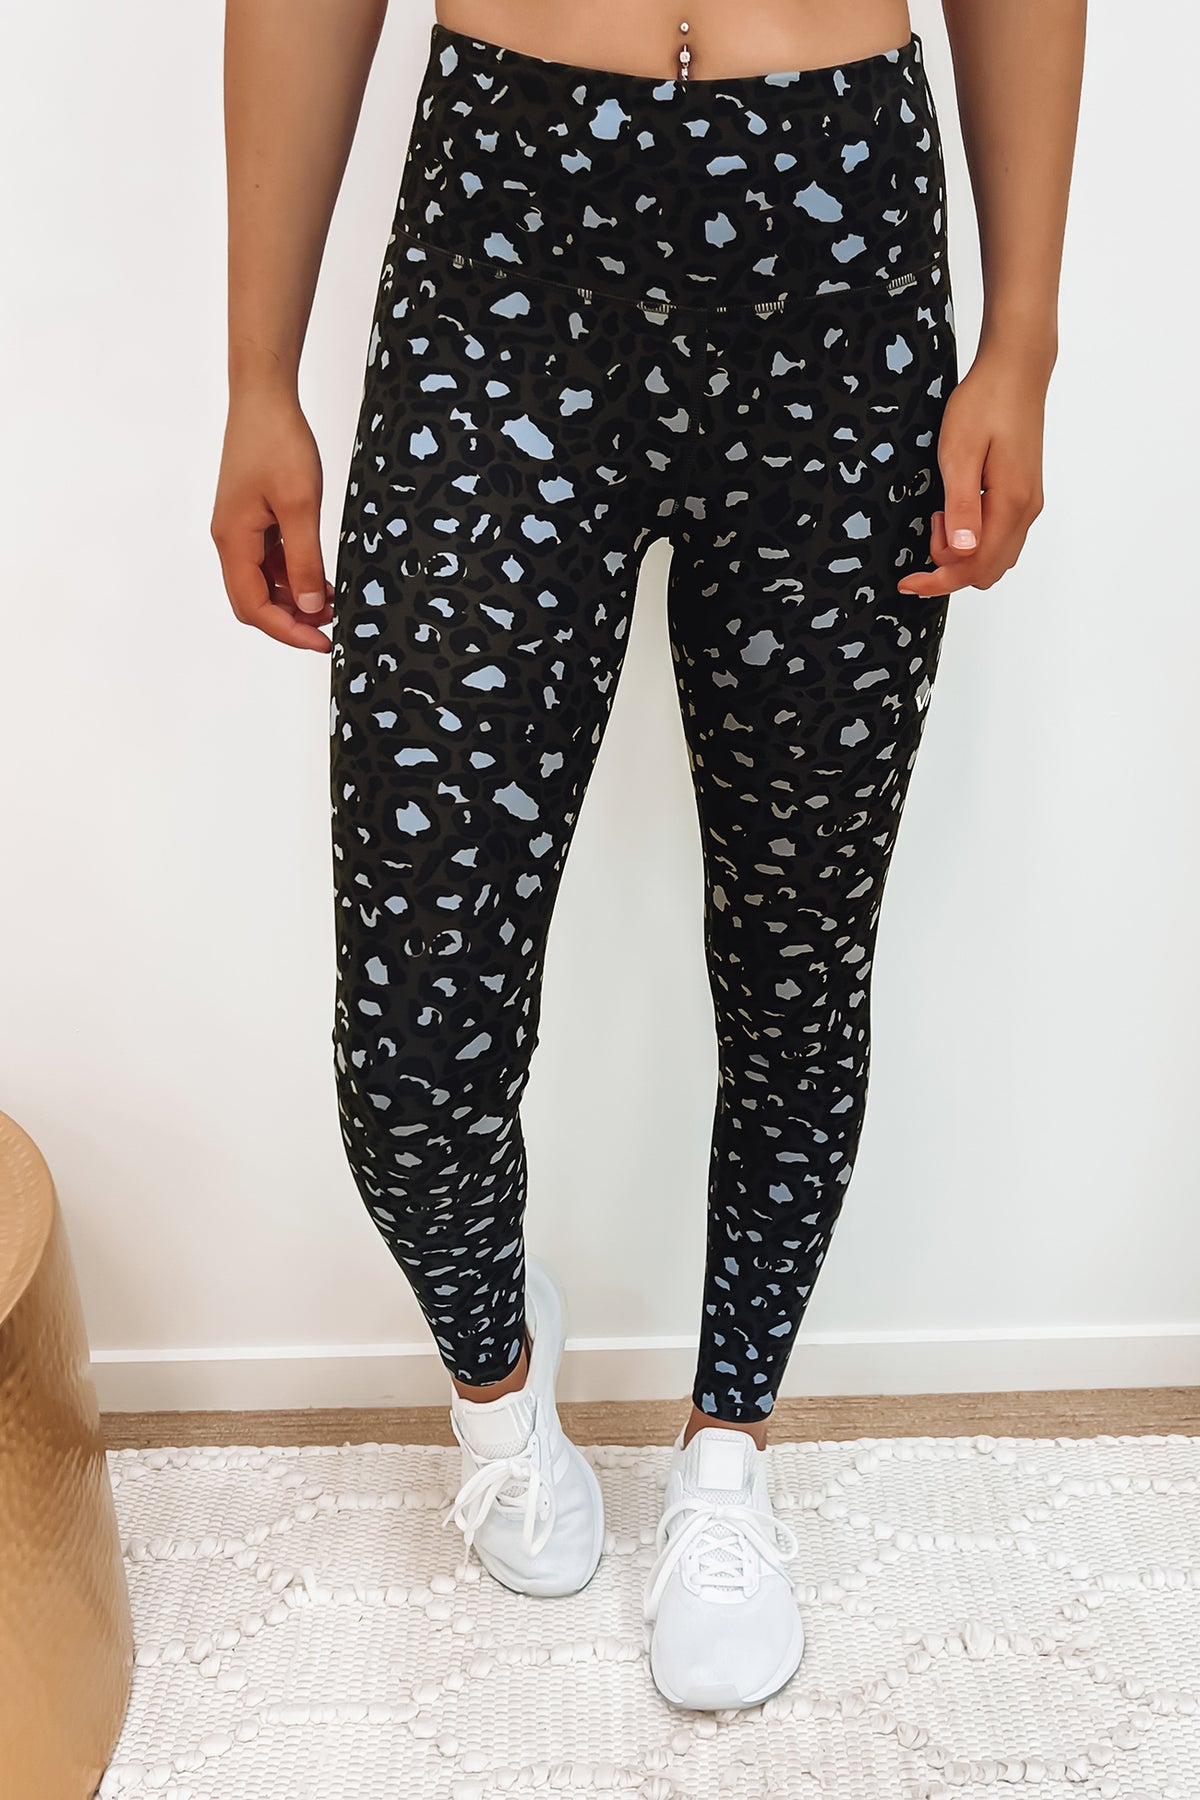 Honeycomb black & white print leggings - Active Trendz